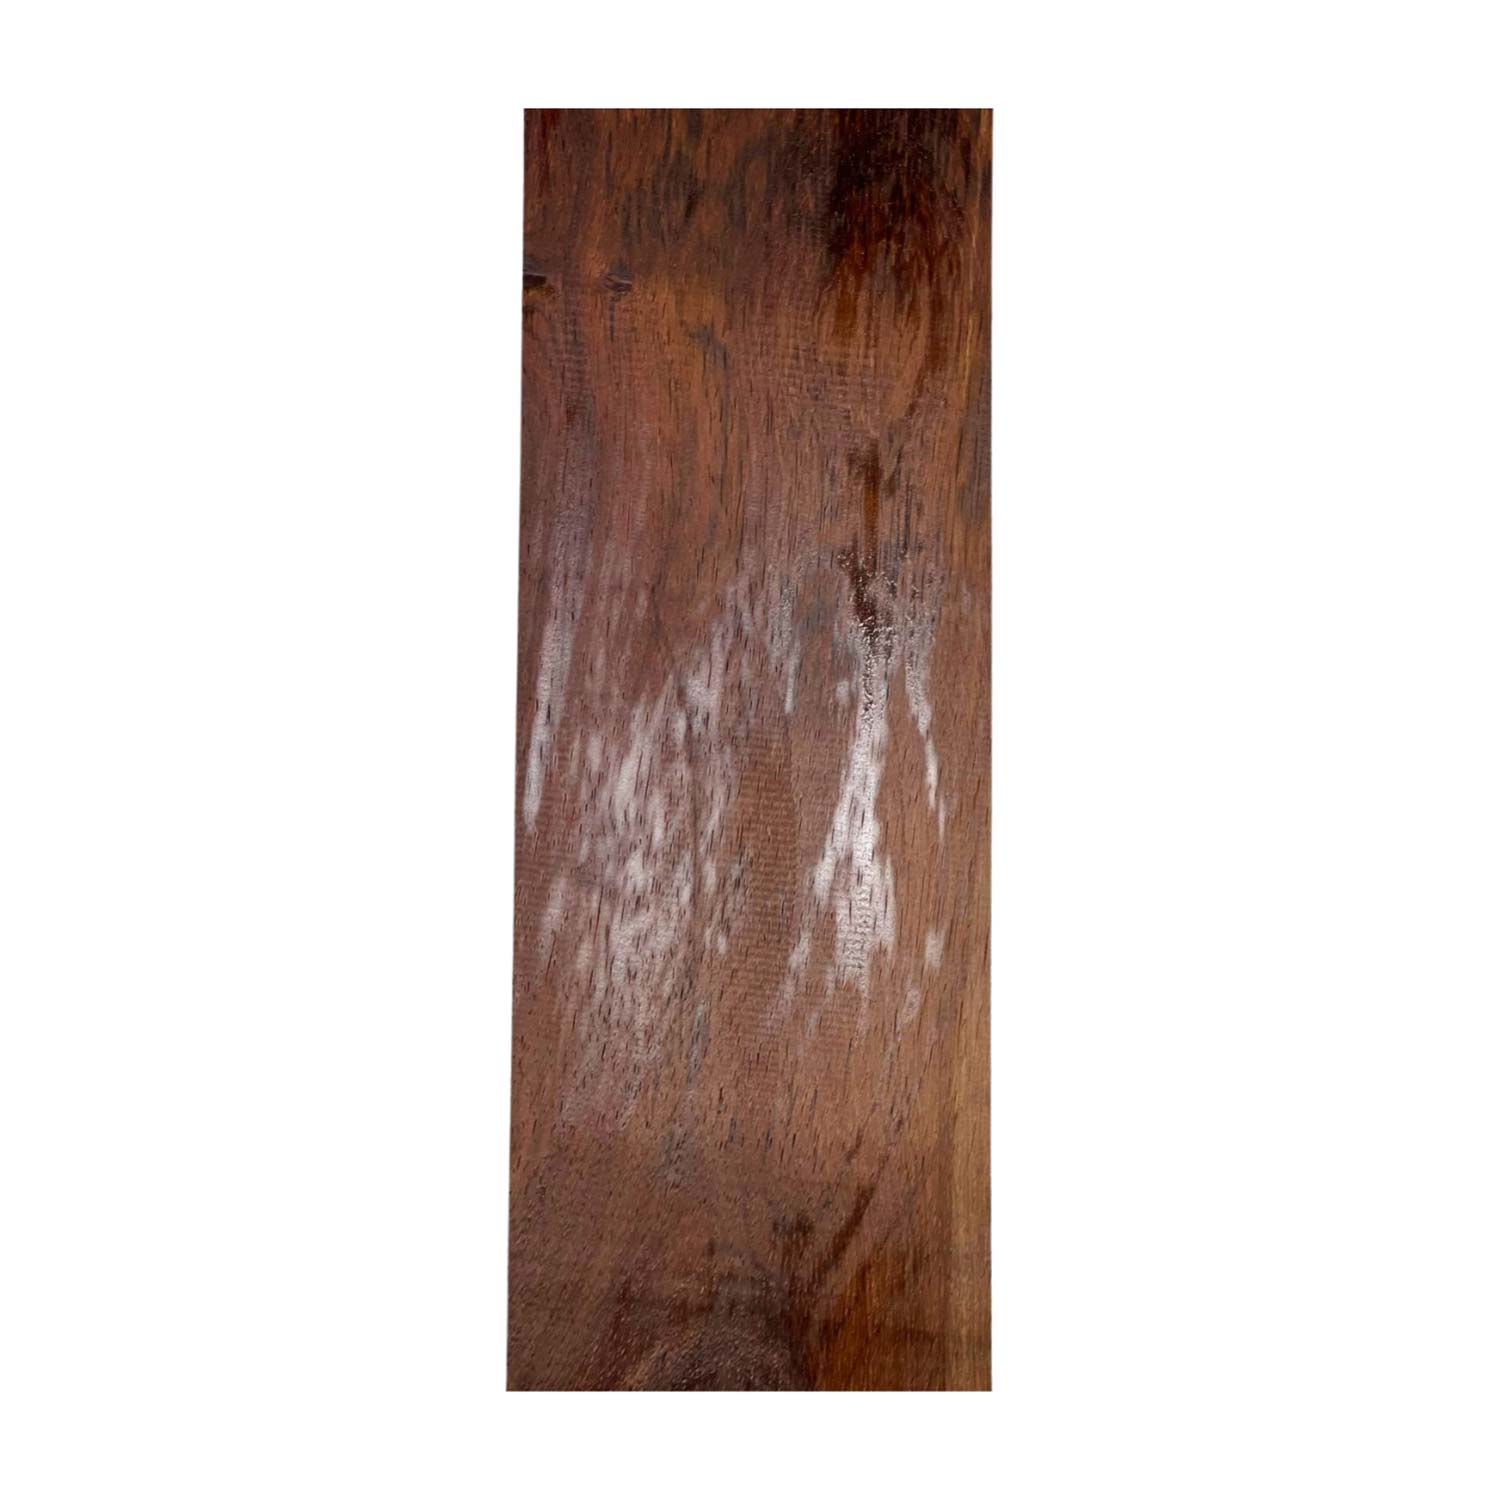 Honduras Rosewood Lumber Board 37&quot;x 3-5/8&quot;x 1&quot; 